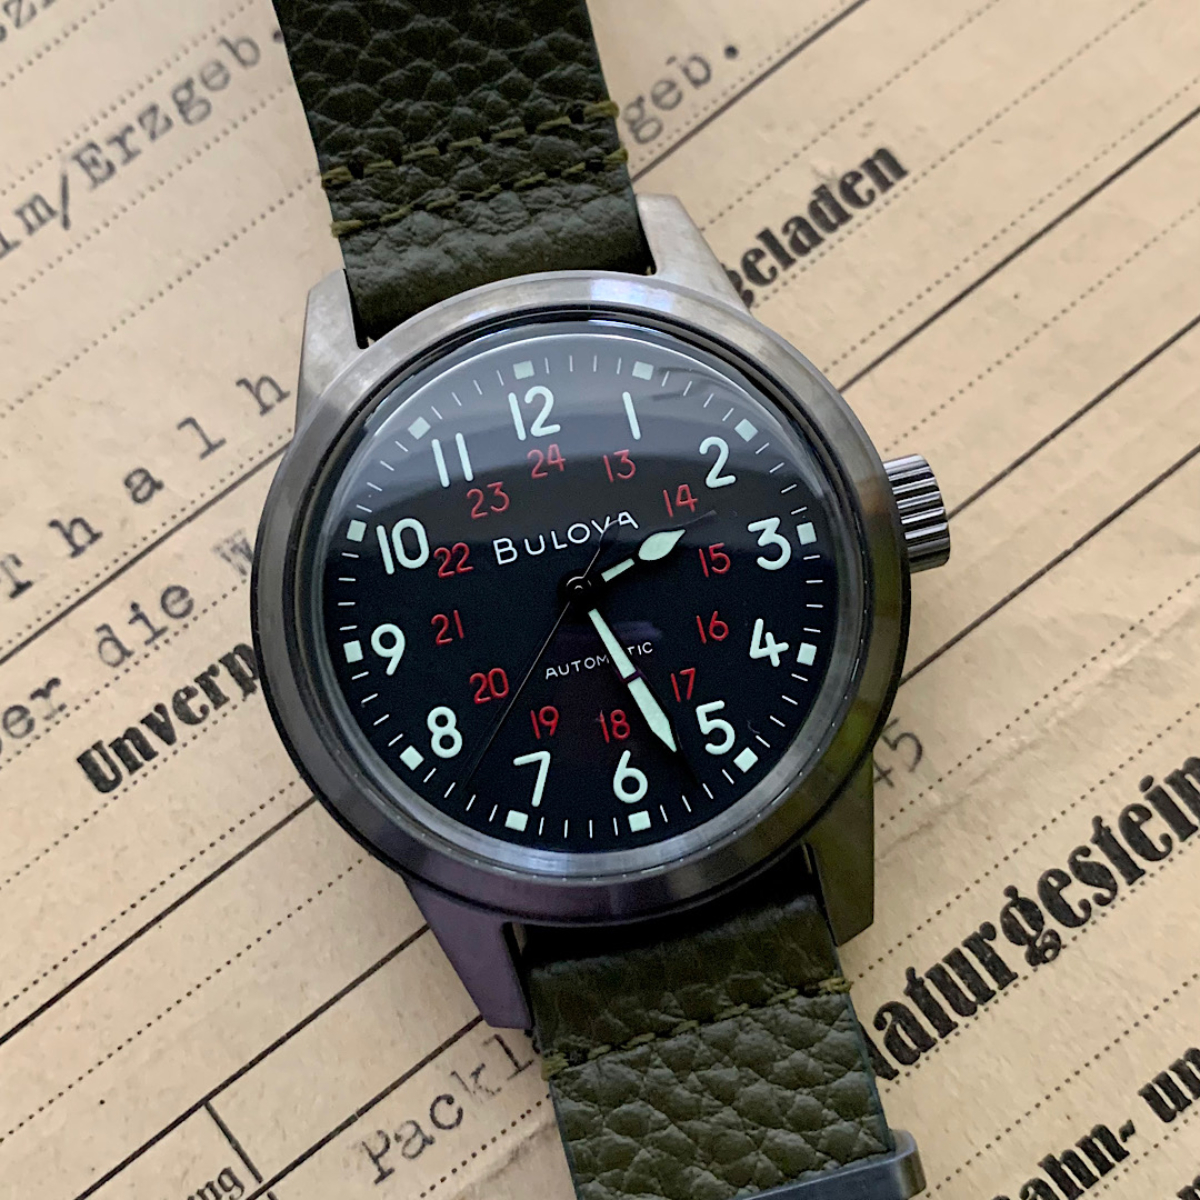 Bulova hack watch